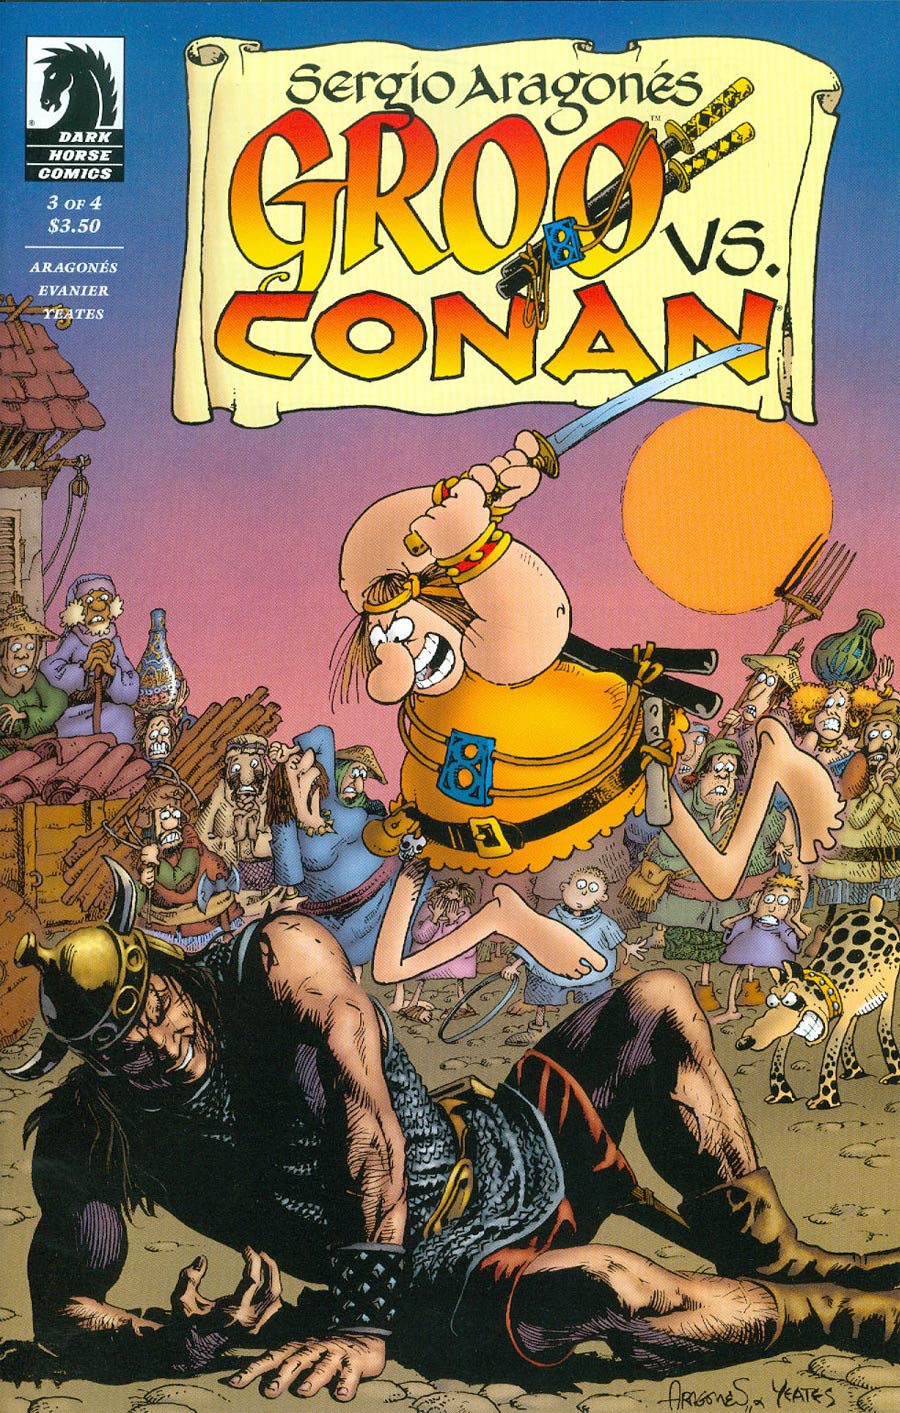 Groo vs Conan #3